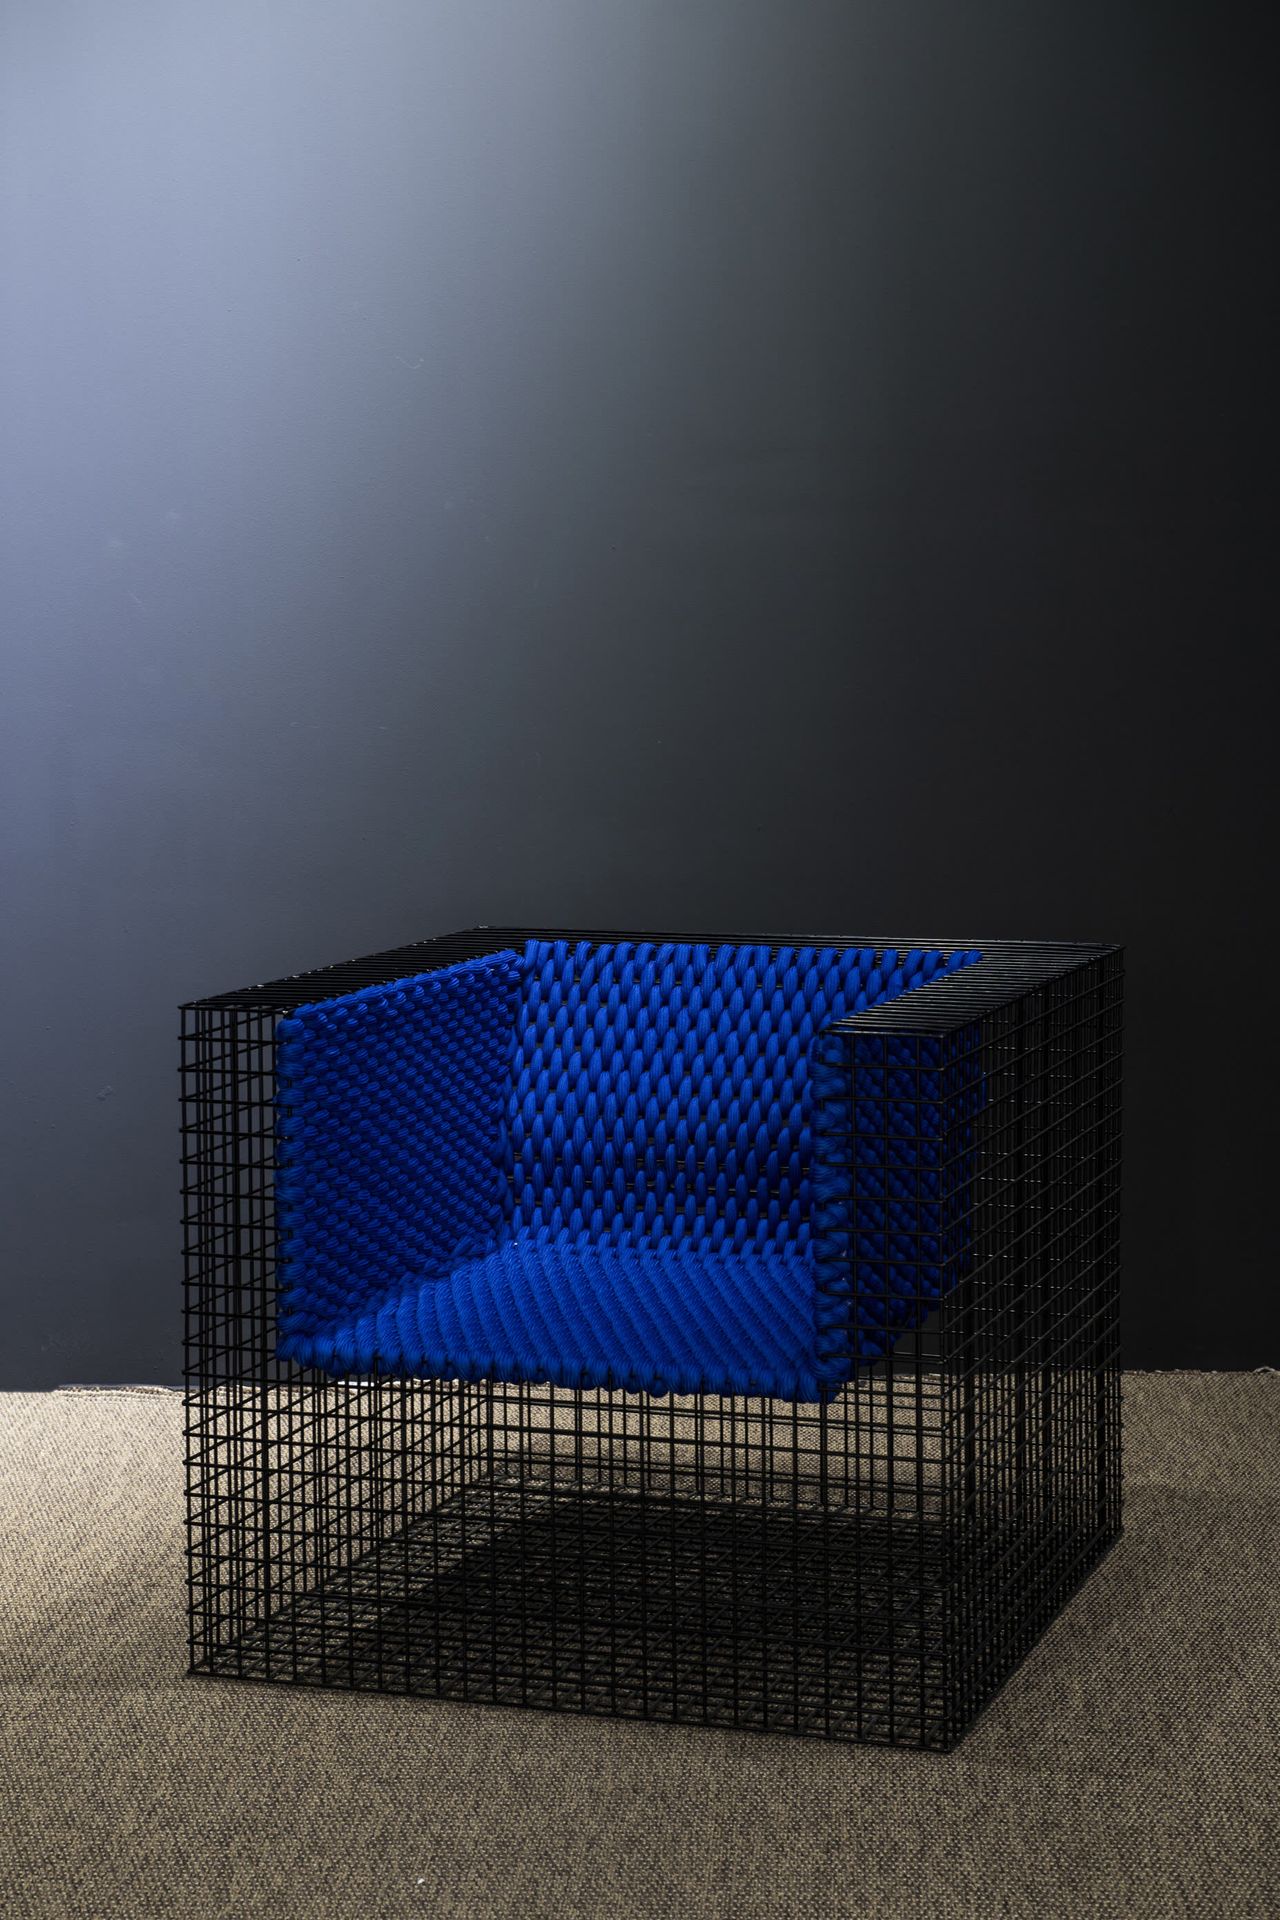 GEDION KIM Sessel
Draht, Seil
2019
H 66 B 78 T 80 cm
Provenienz: Galerie Iham